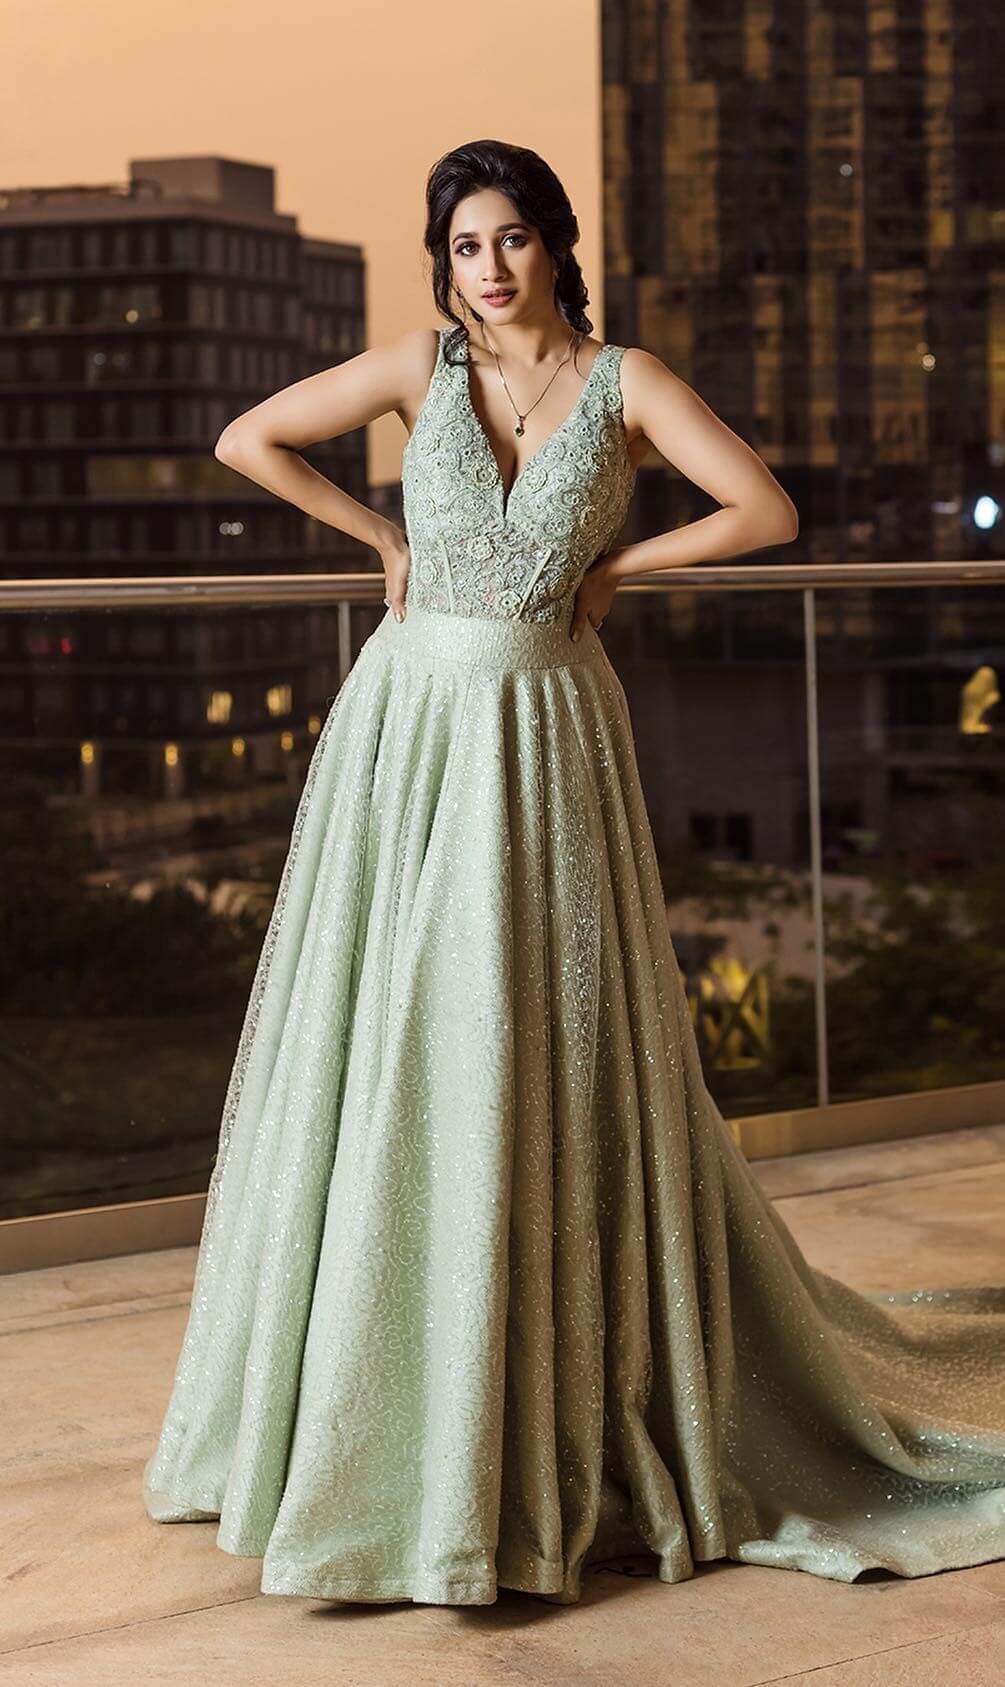 Manvitha Kamath Beautiful Look In Glittery Light Green Deep V- Neck Gown